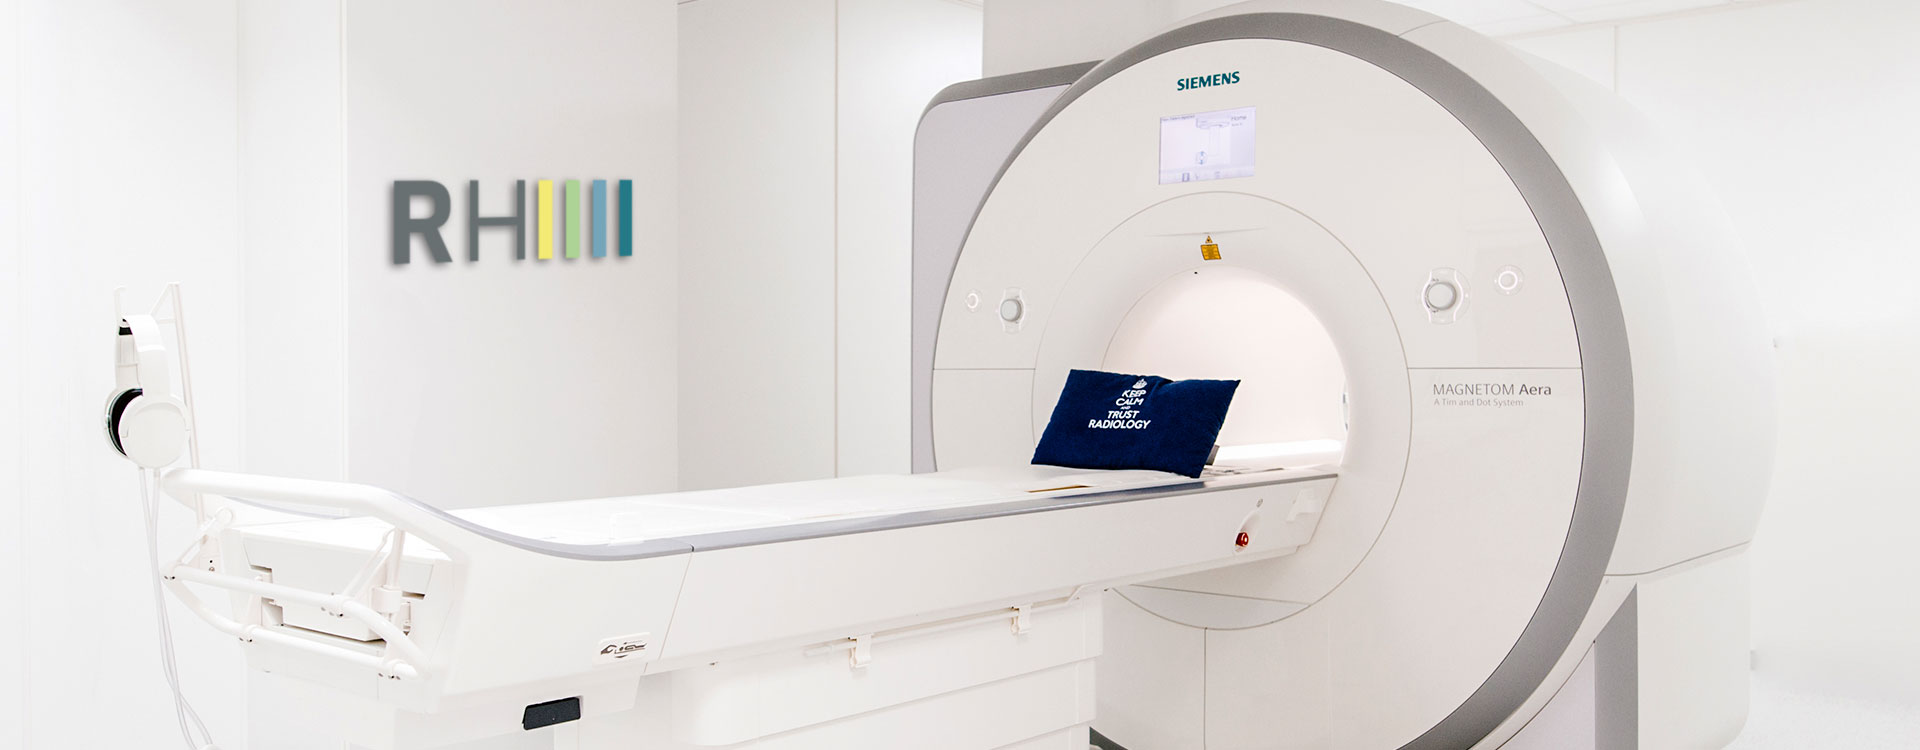 Neuroradiologie, Prostatadiagnostik | MRT | Radiologie Heinrichsallee